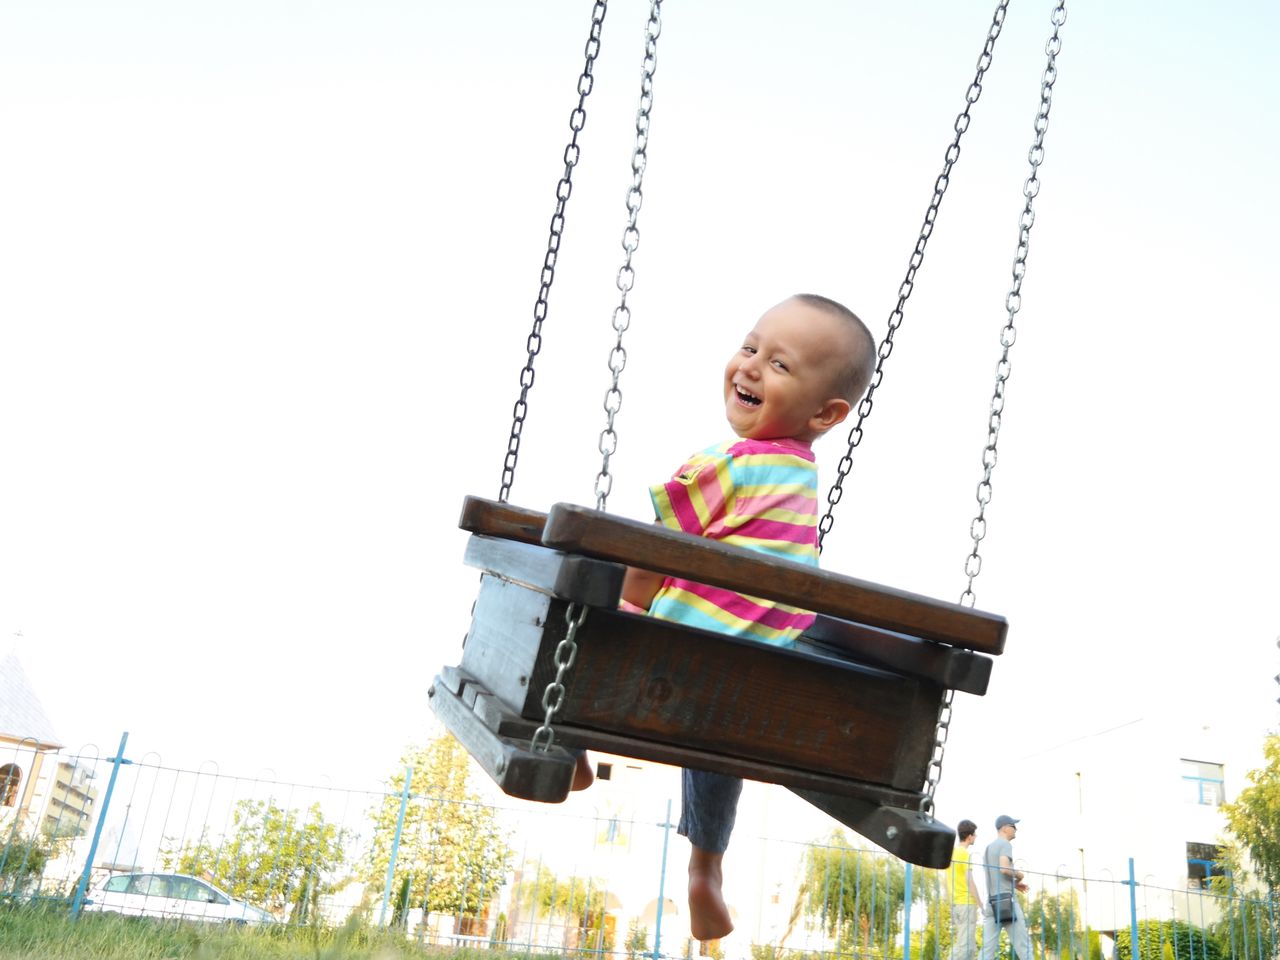 Portrait of happy boy enjoying in swing at park against clear sky